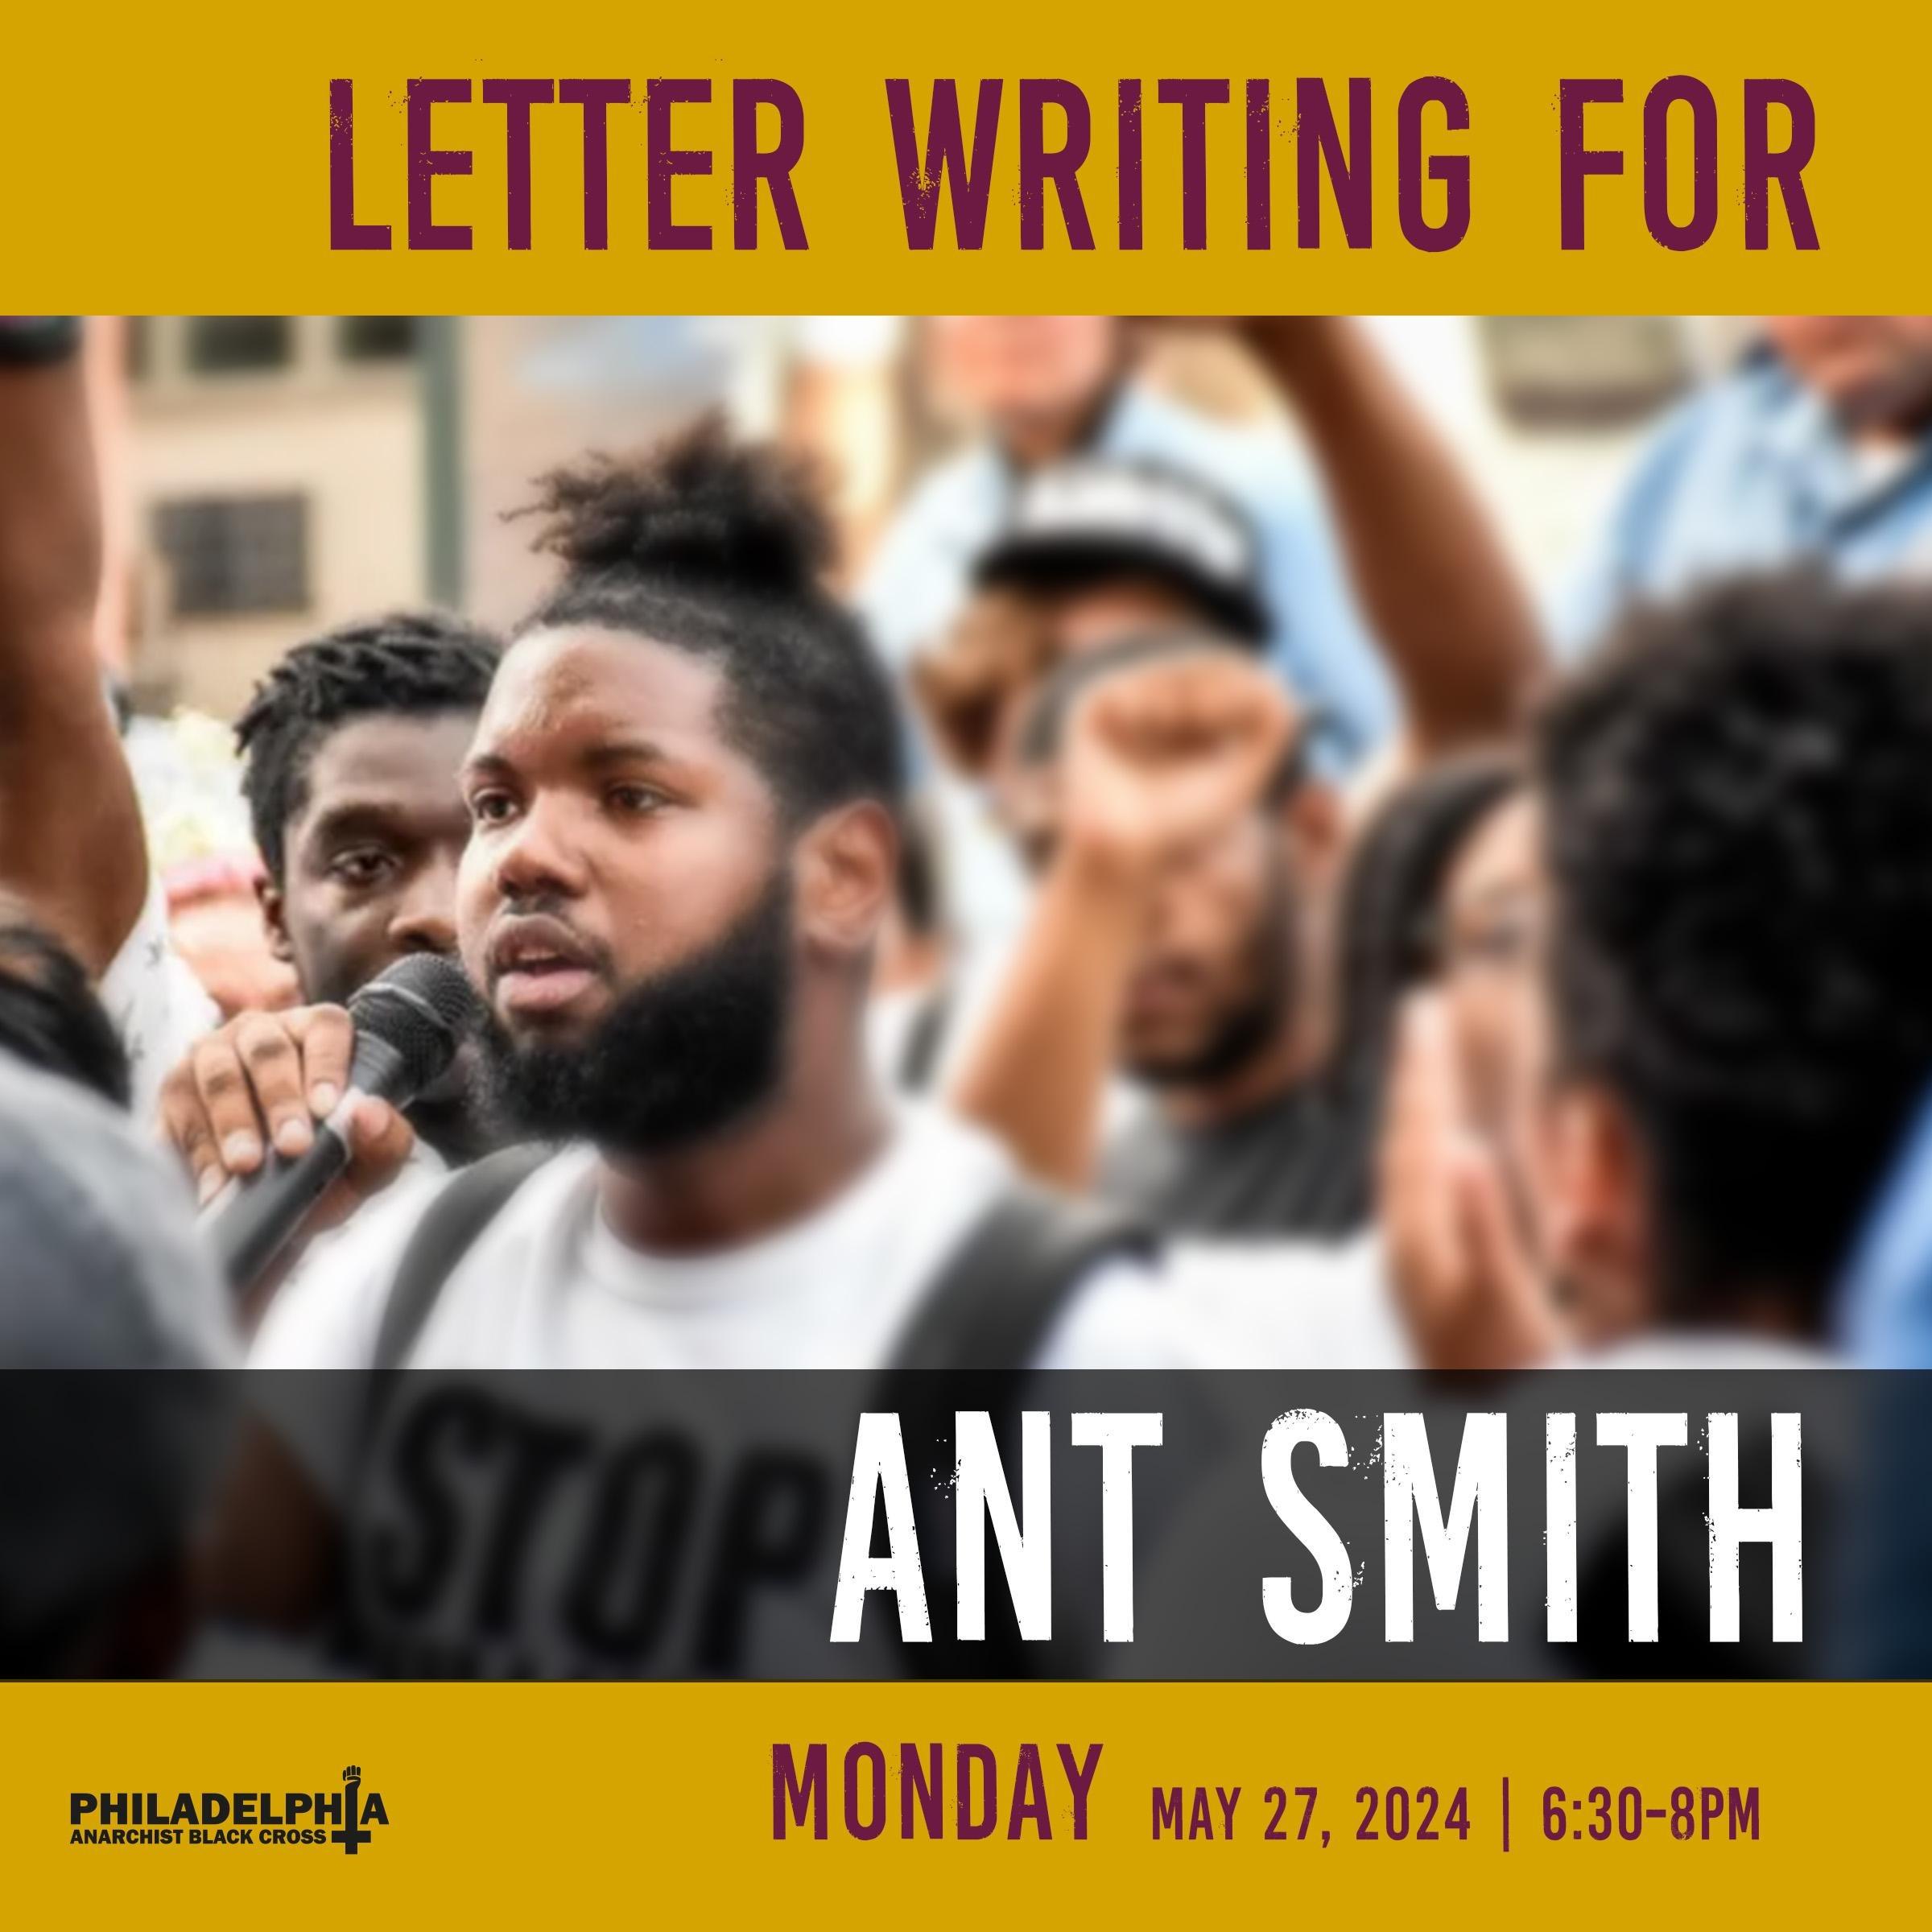 ant-smith-letter-writing.jpg